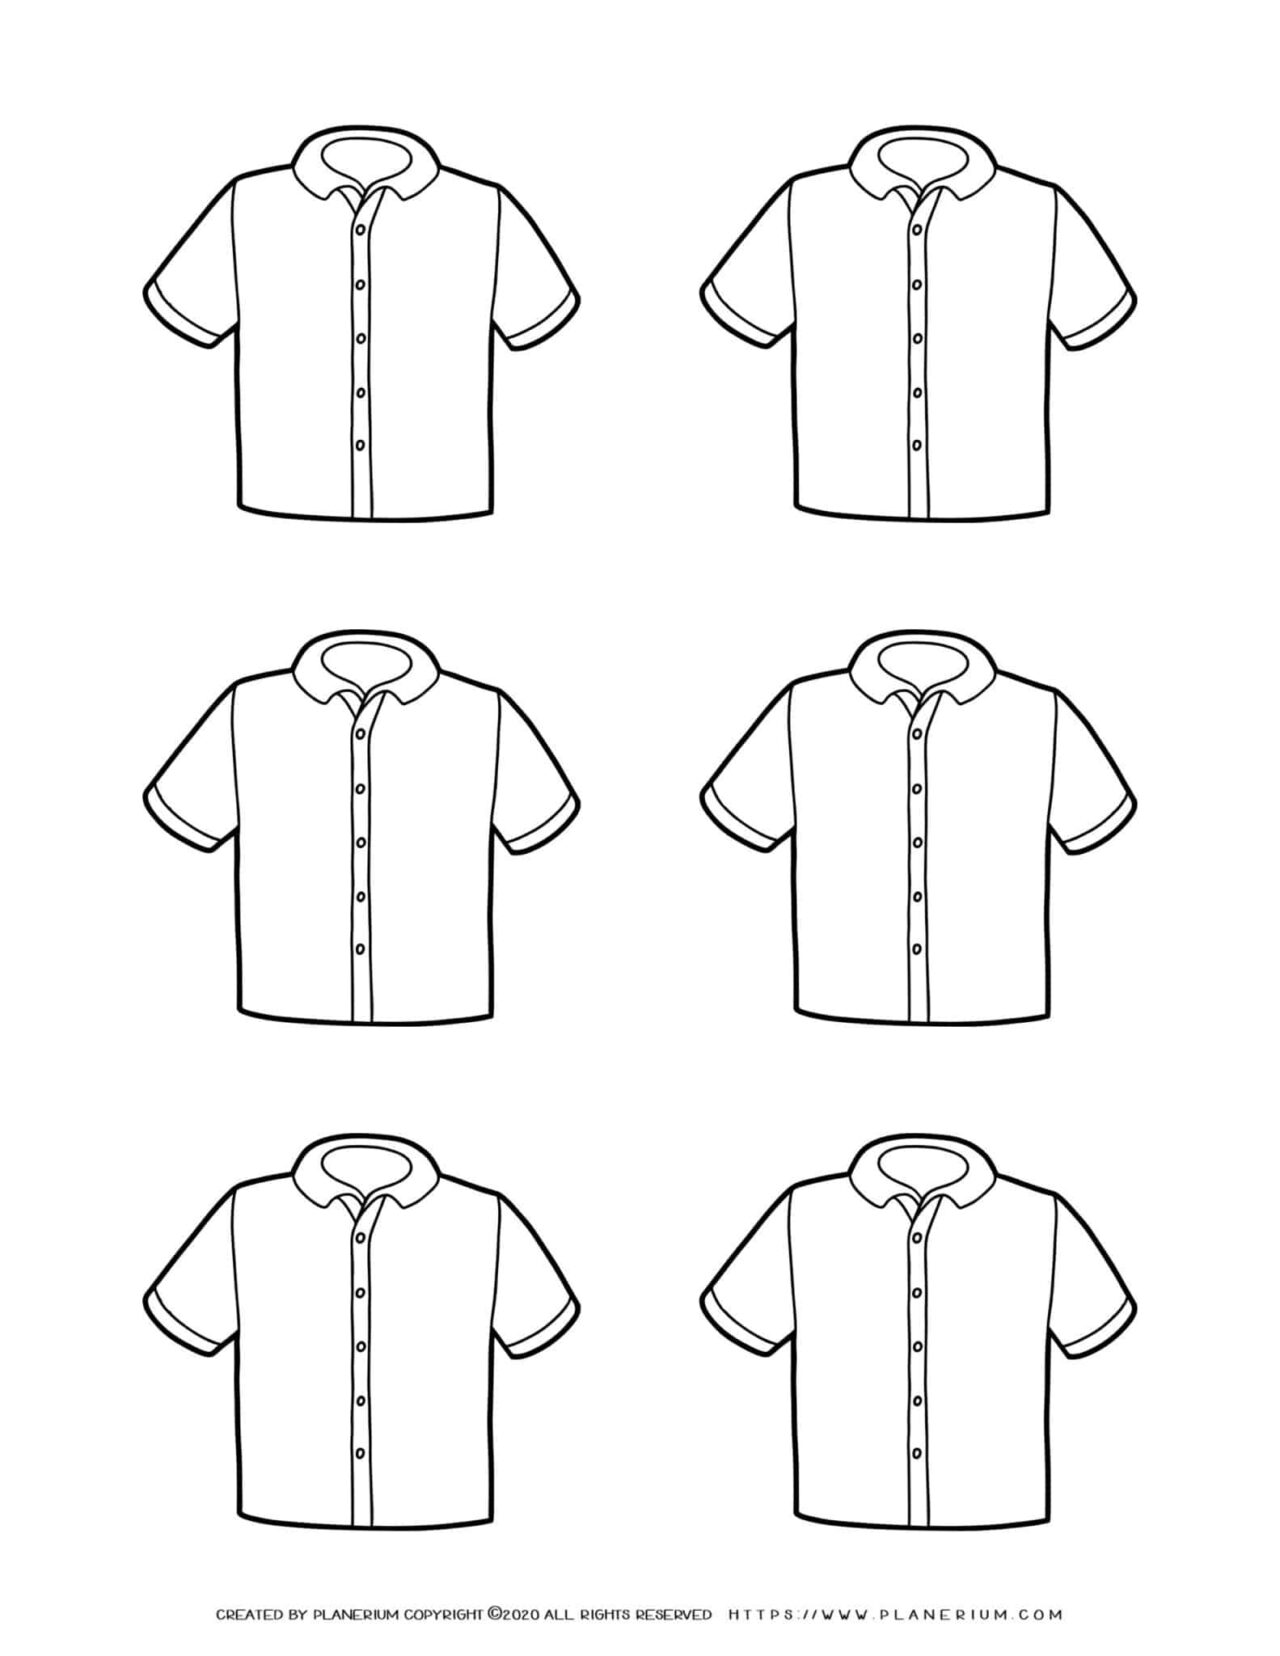 Clothes Template - Six Shirts | Planerium